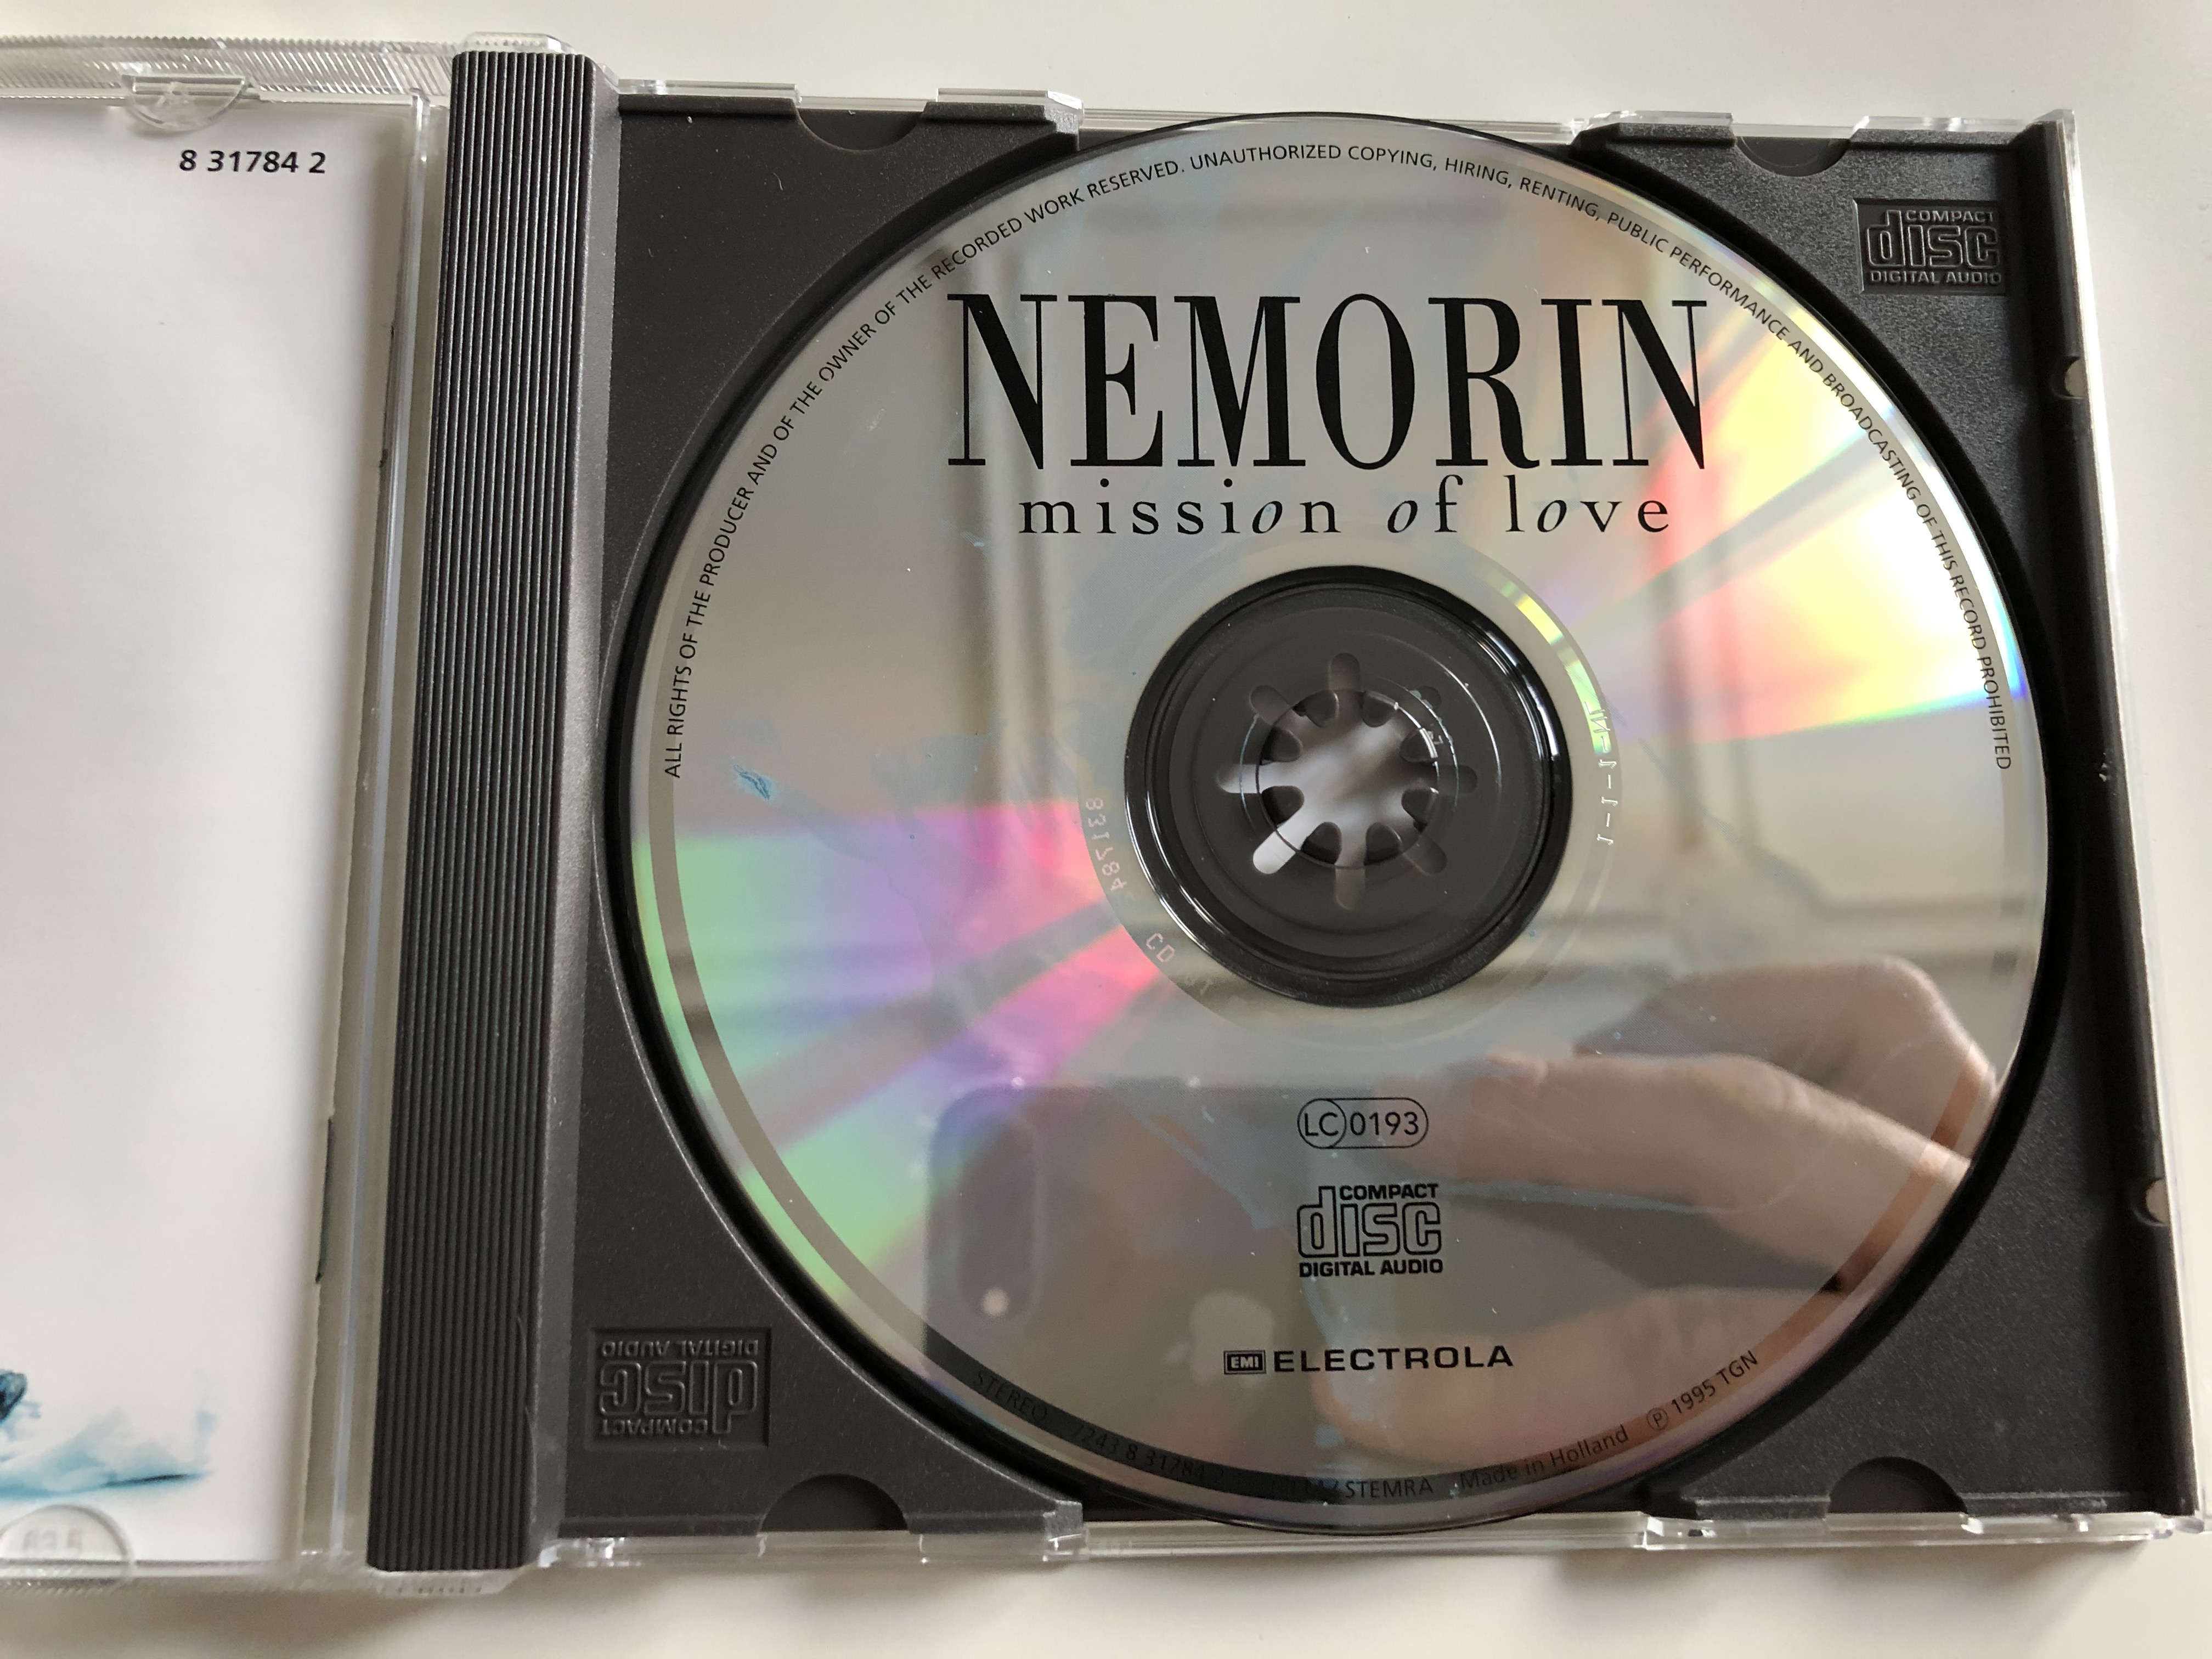 nemorin-mission-of-love-electrola-audio-cd-1995-stereo-724383178421-6-.jpg